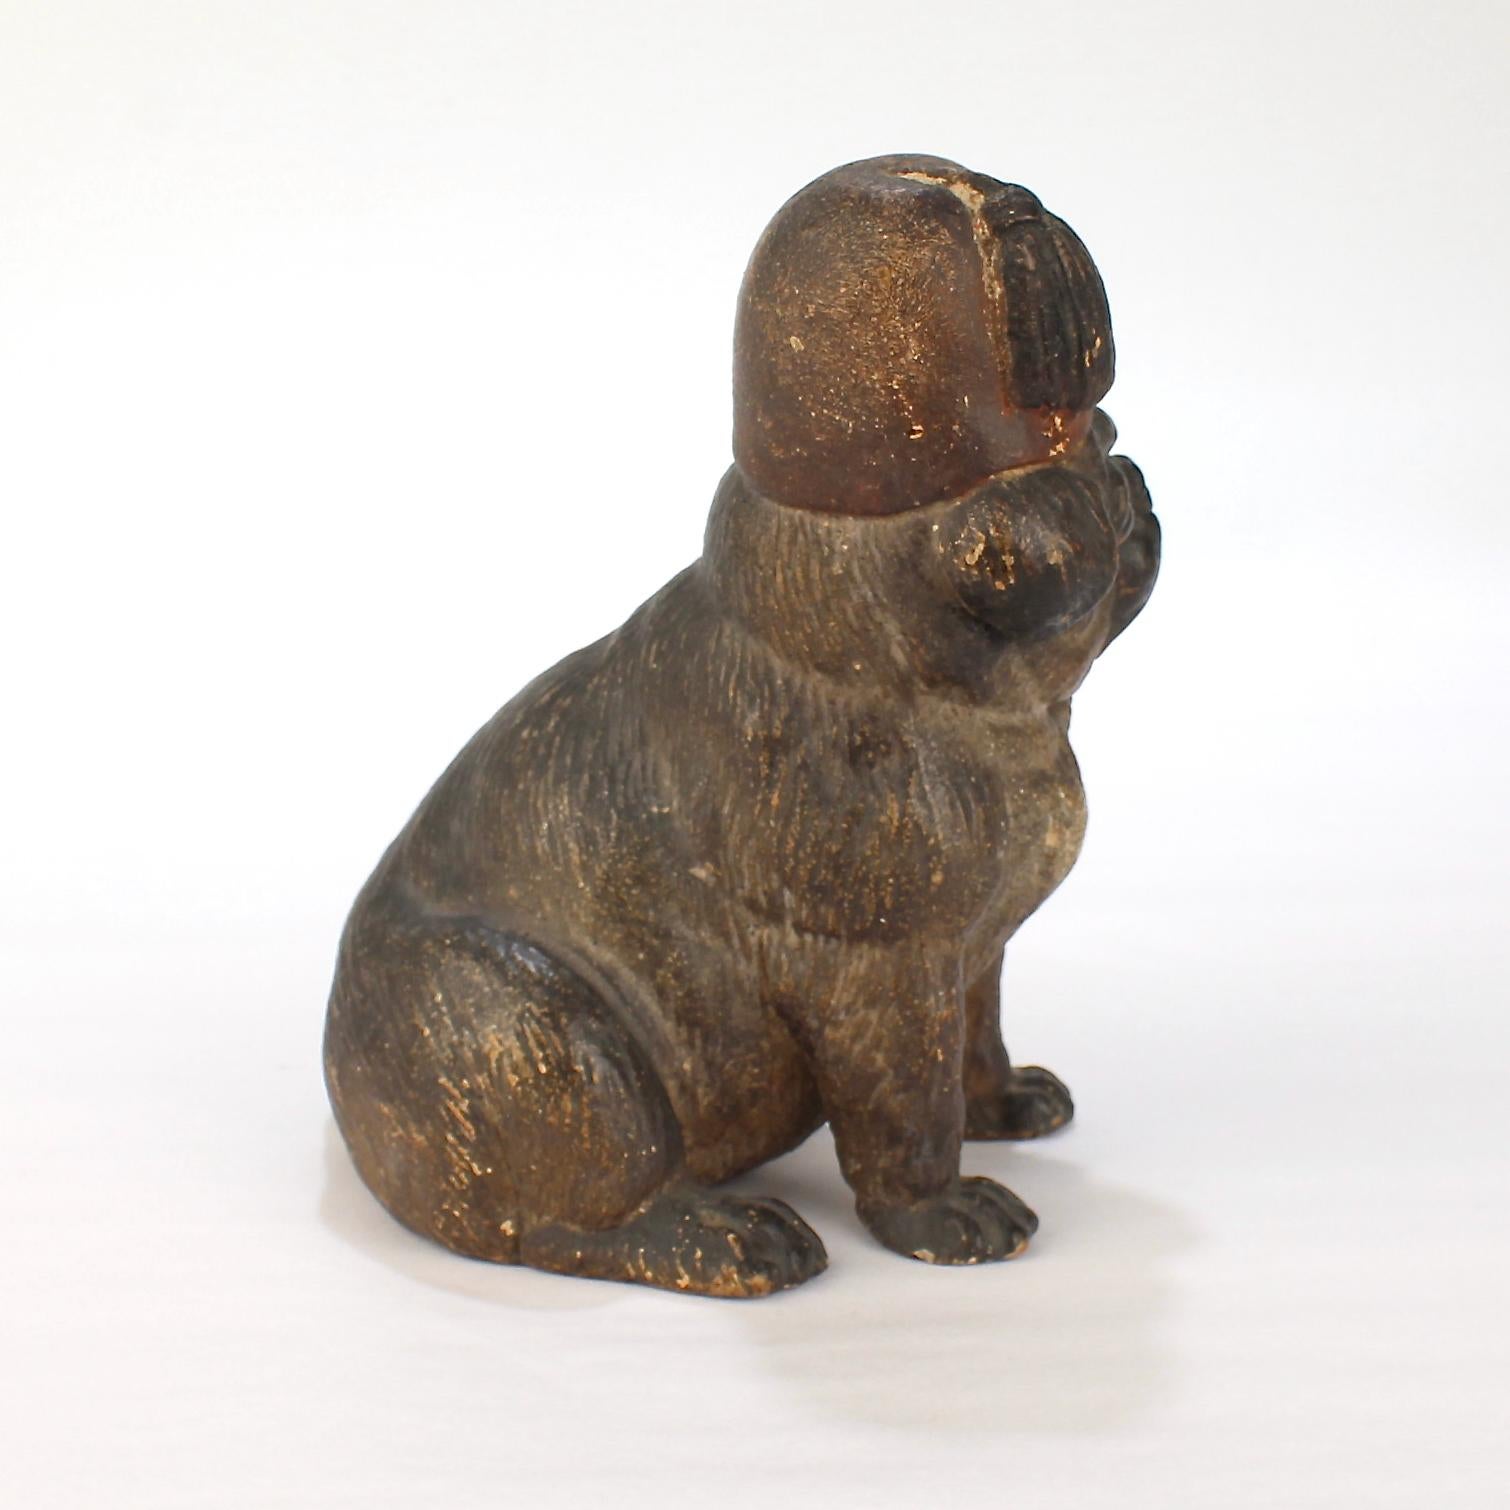 Victorian Antique Terra Cotta Pottery Pug Dog Figure from the Mario Buatta Collection